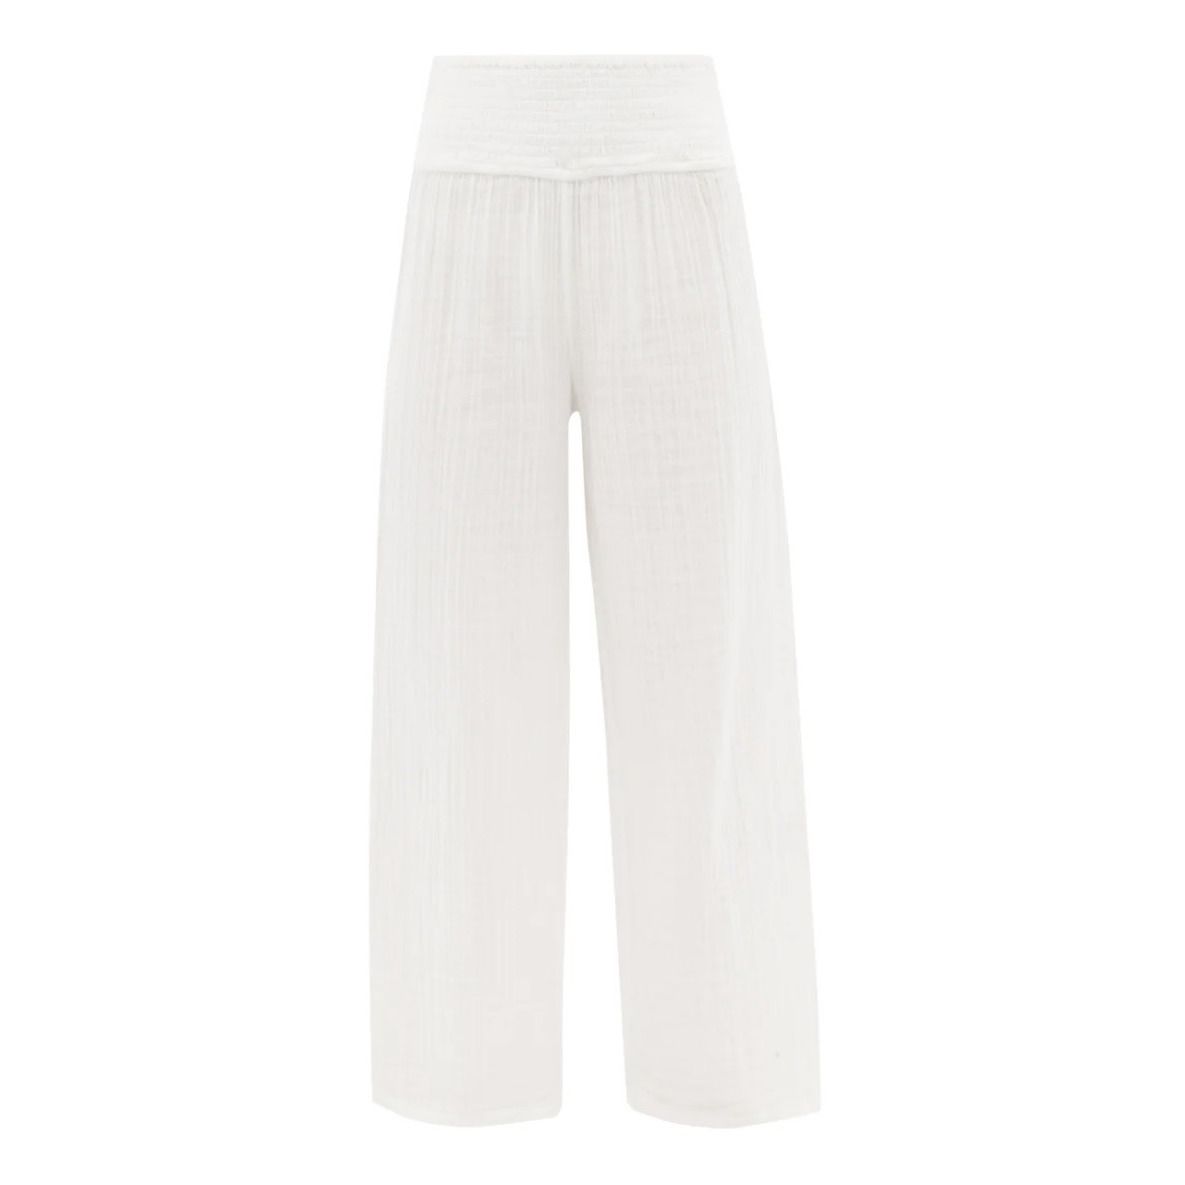 Anaak - Pantalon Maya Mousseline de Coton - Femme - Blanc